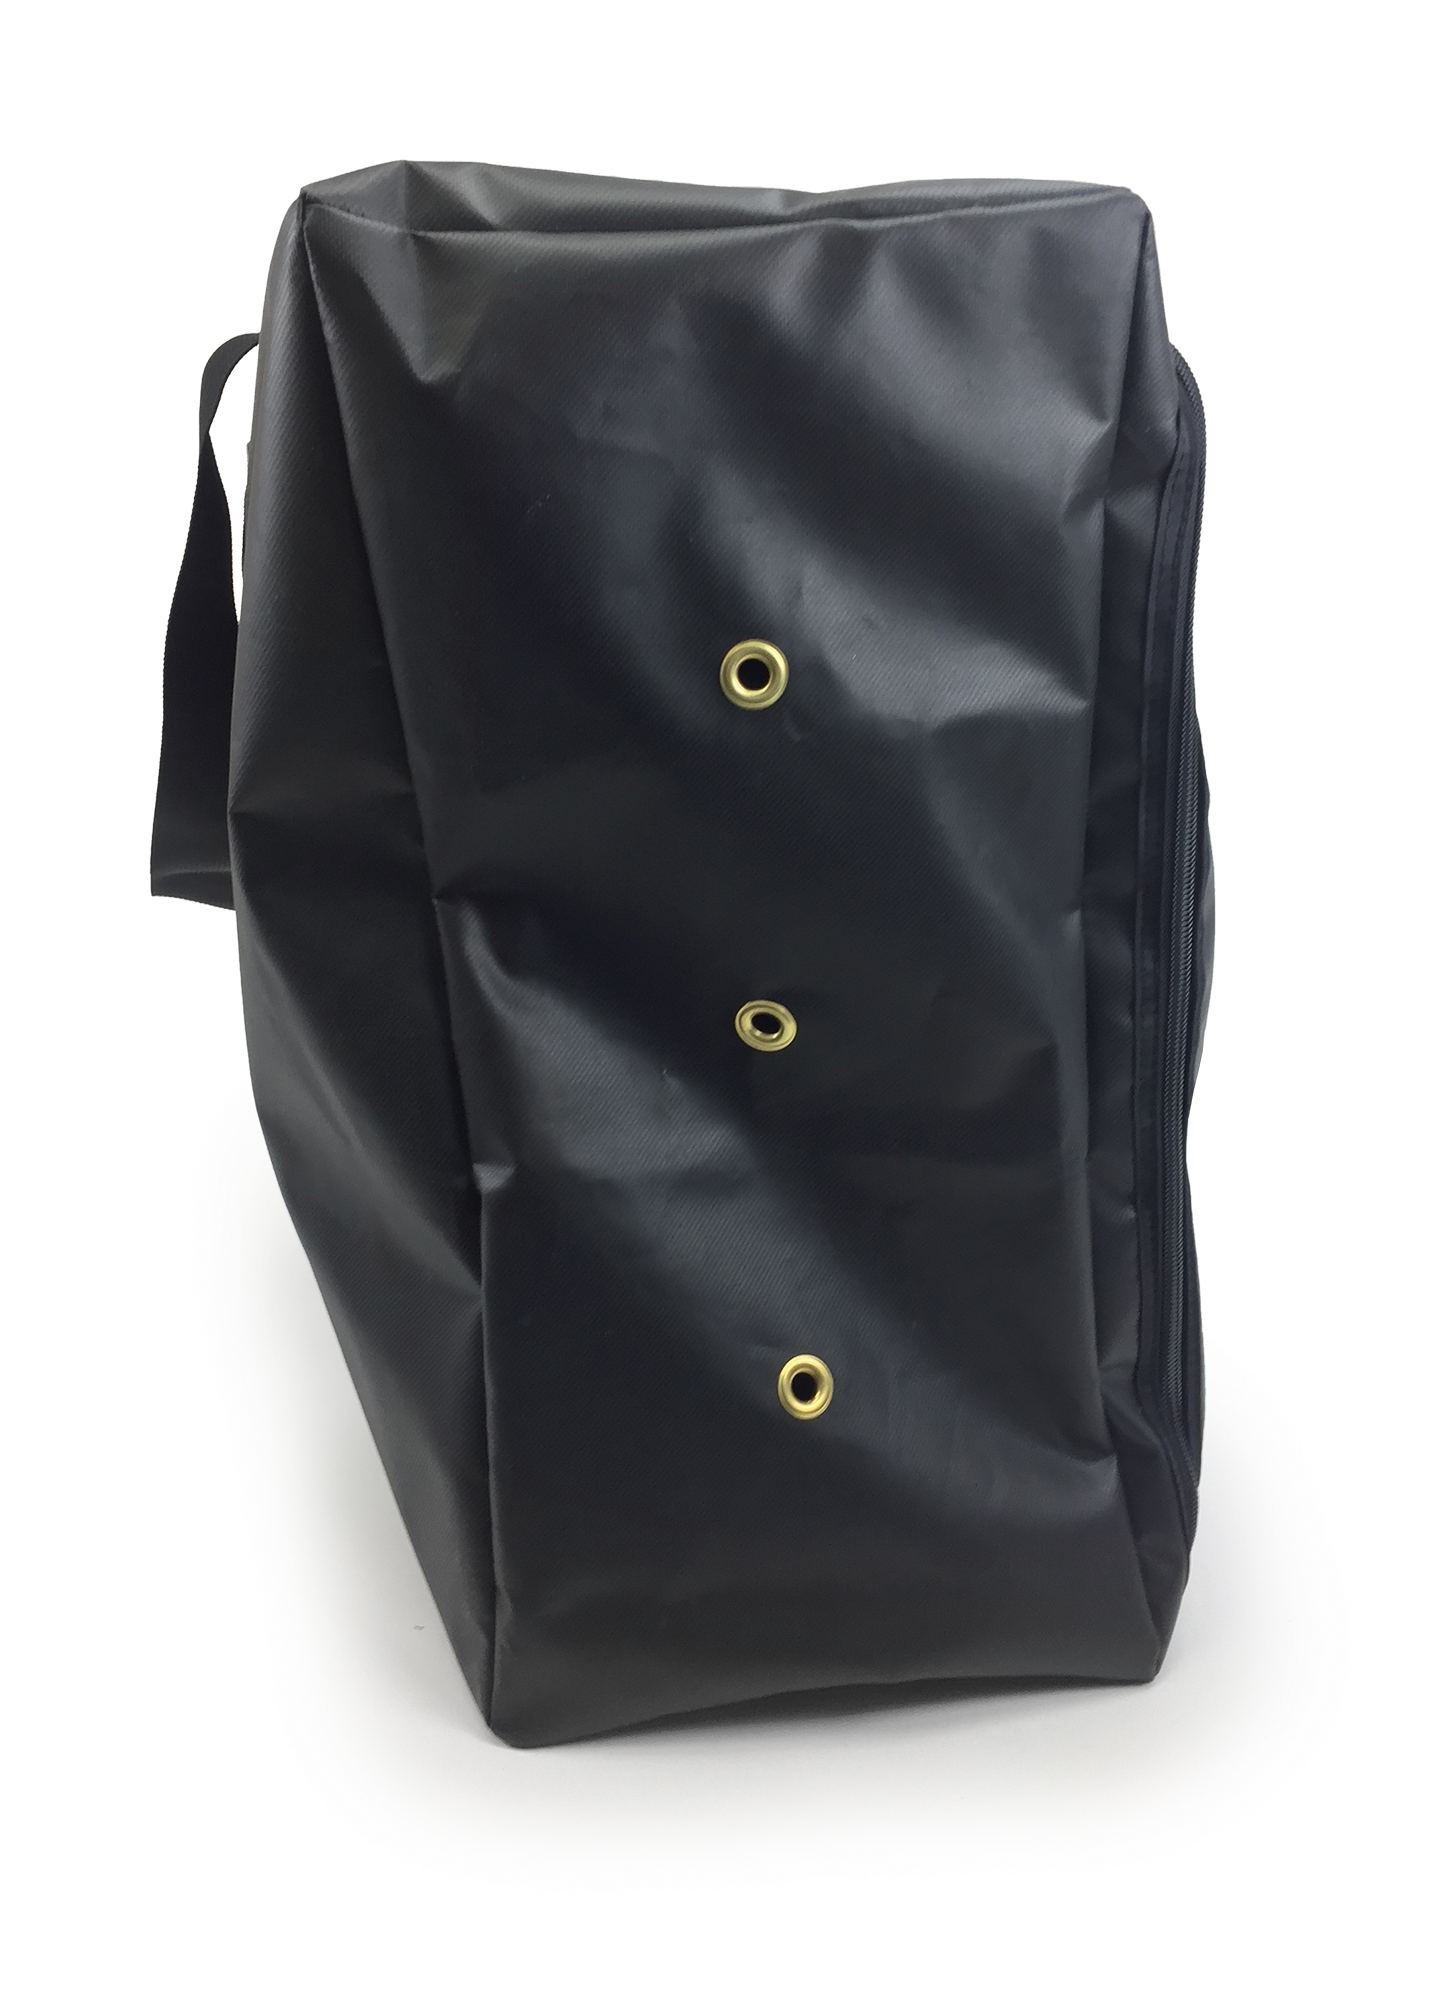 Side profile of pad bag